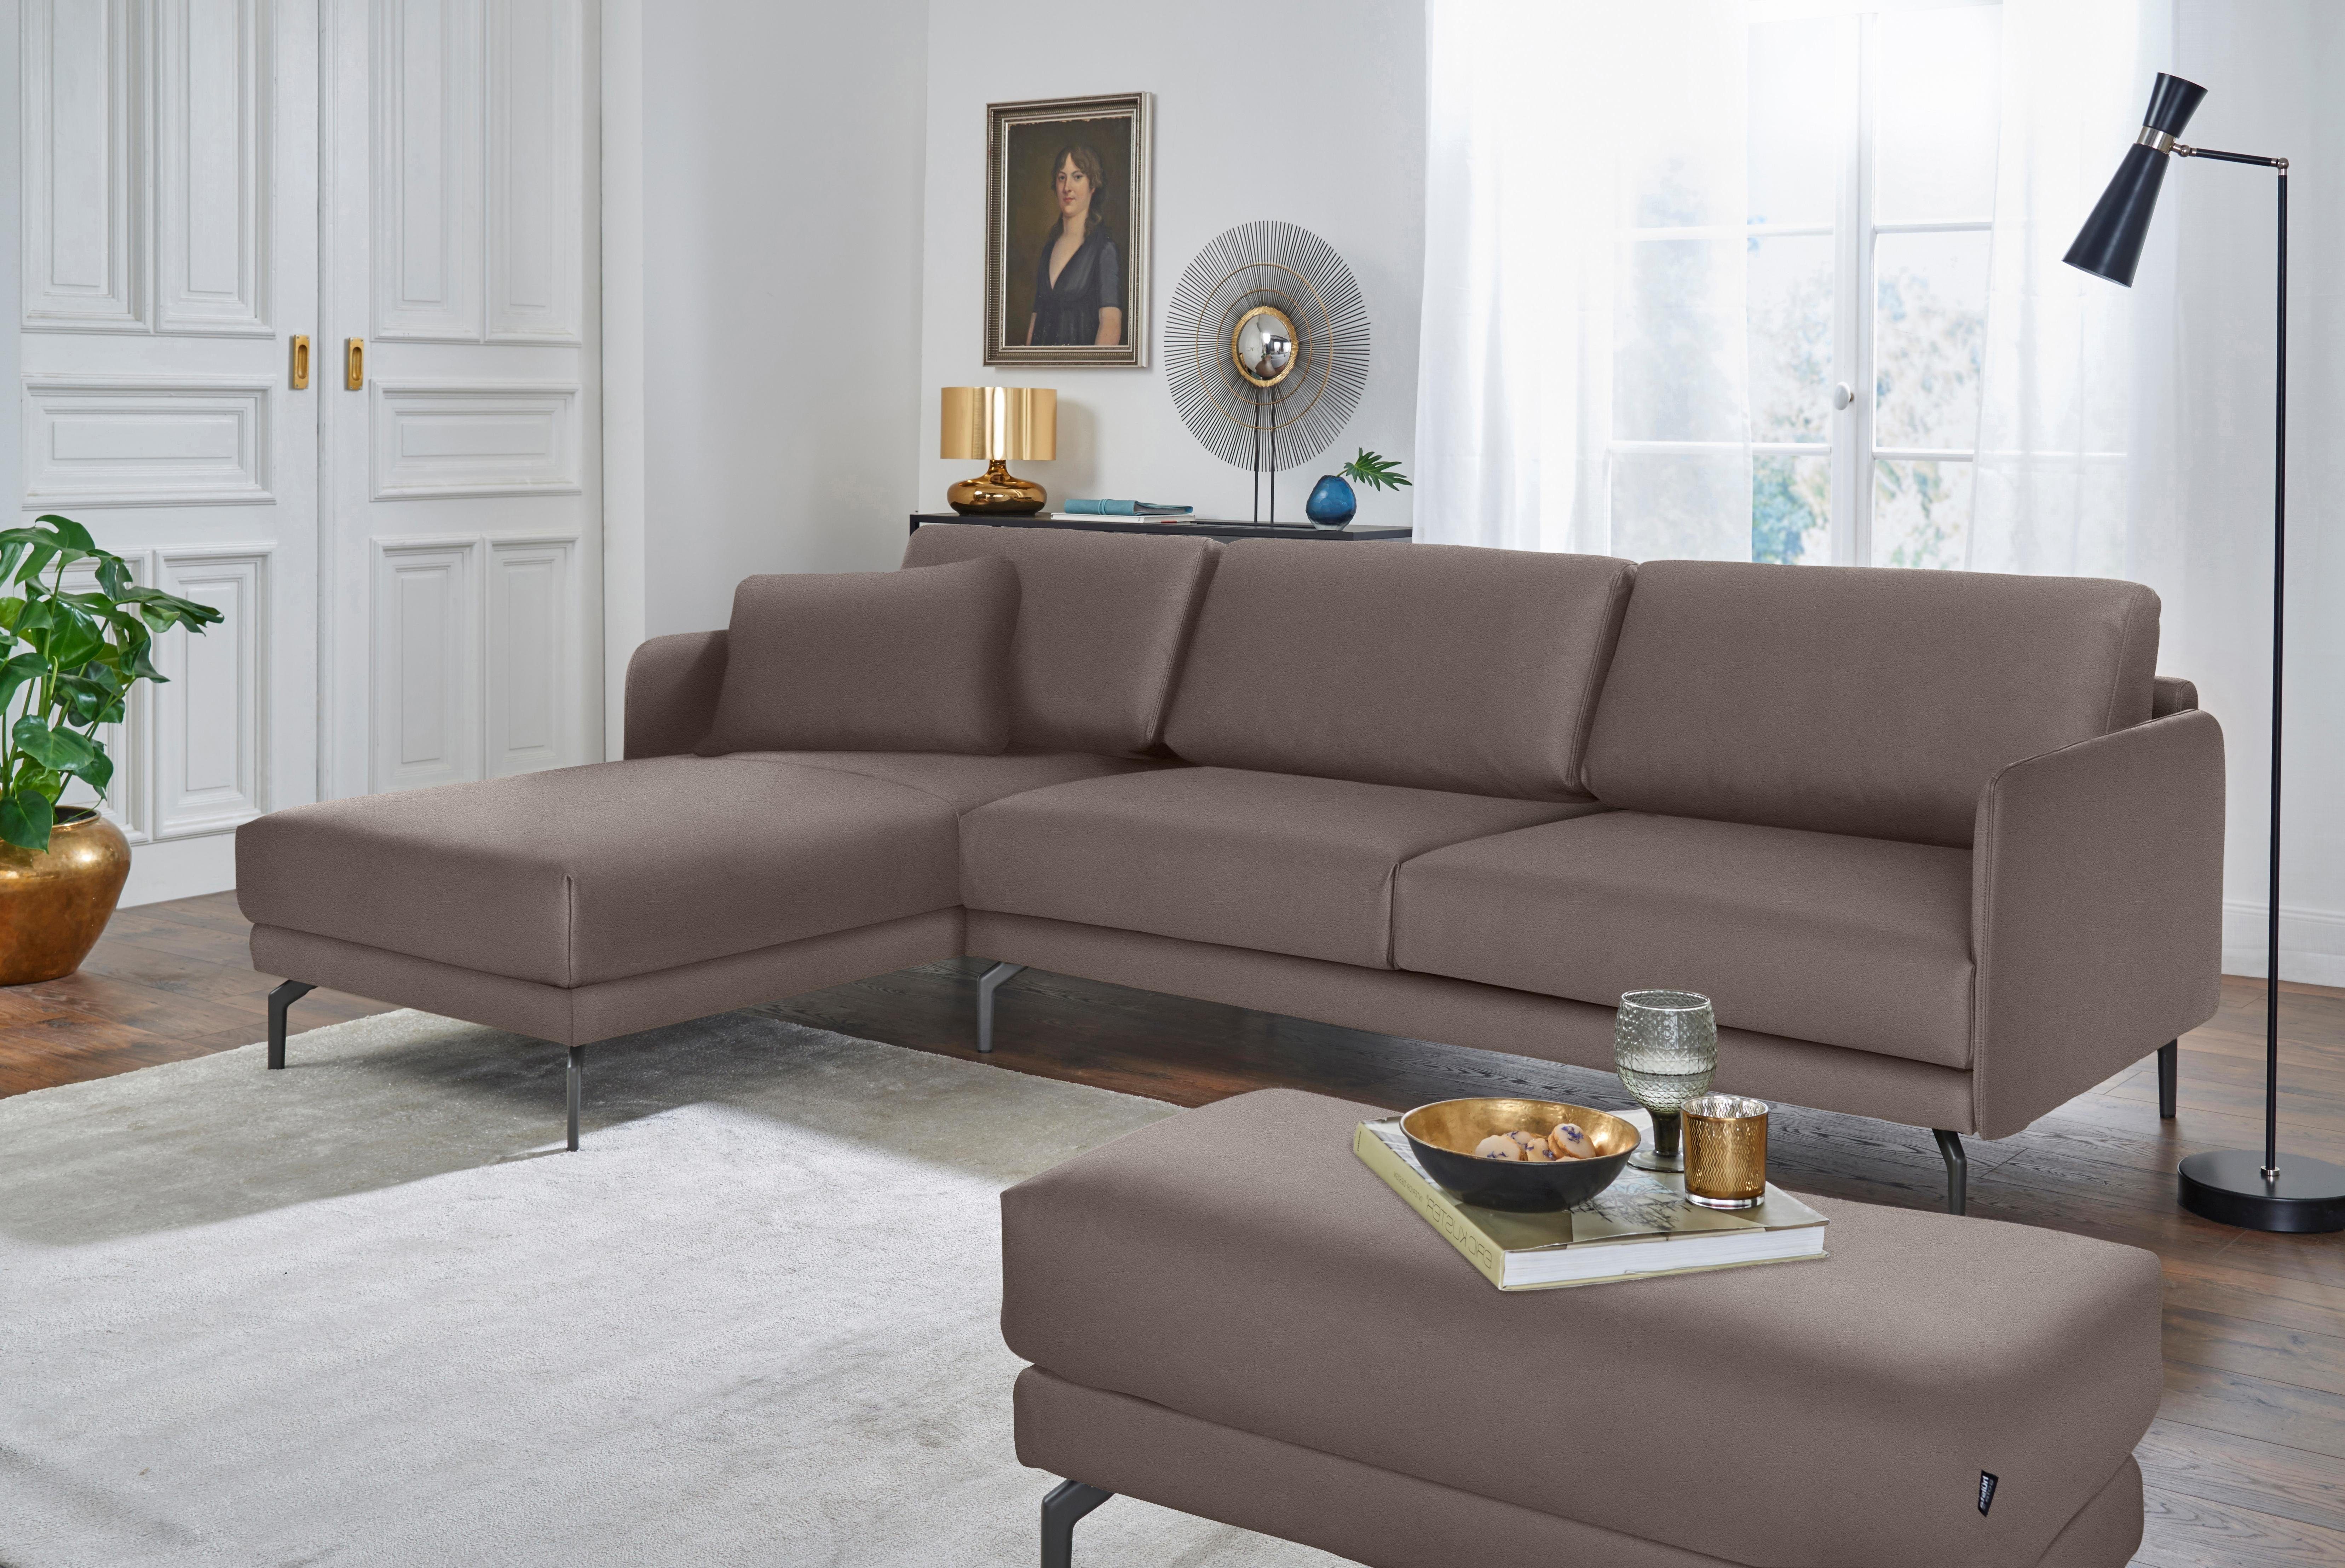 hülsta sofa Ecksofa hs.450, sehr Alugussfüße Armlehne in 234 umbragrau cm, Breite schmal